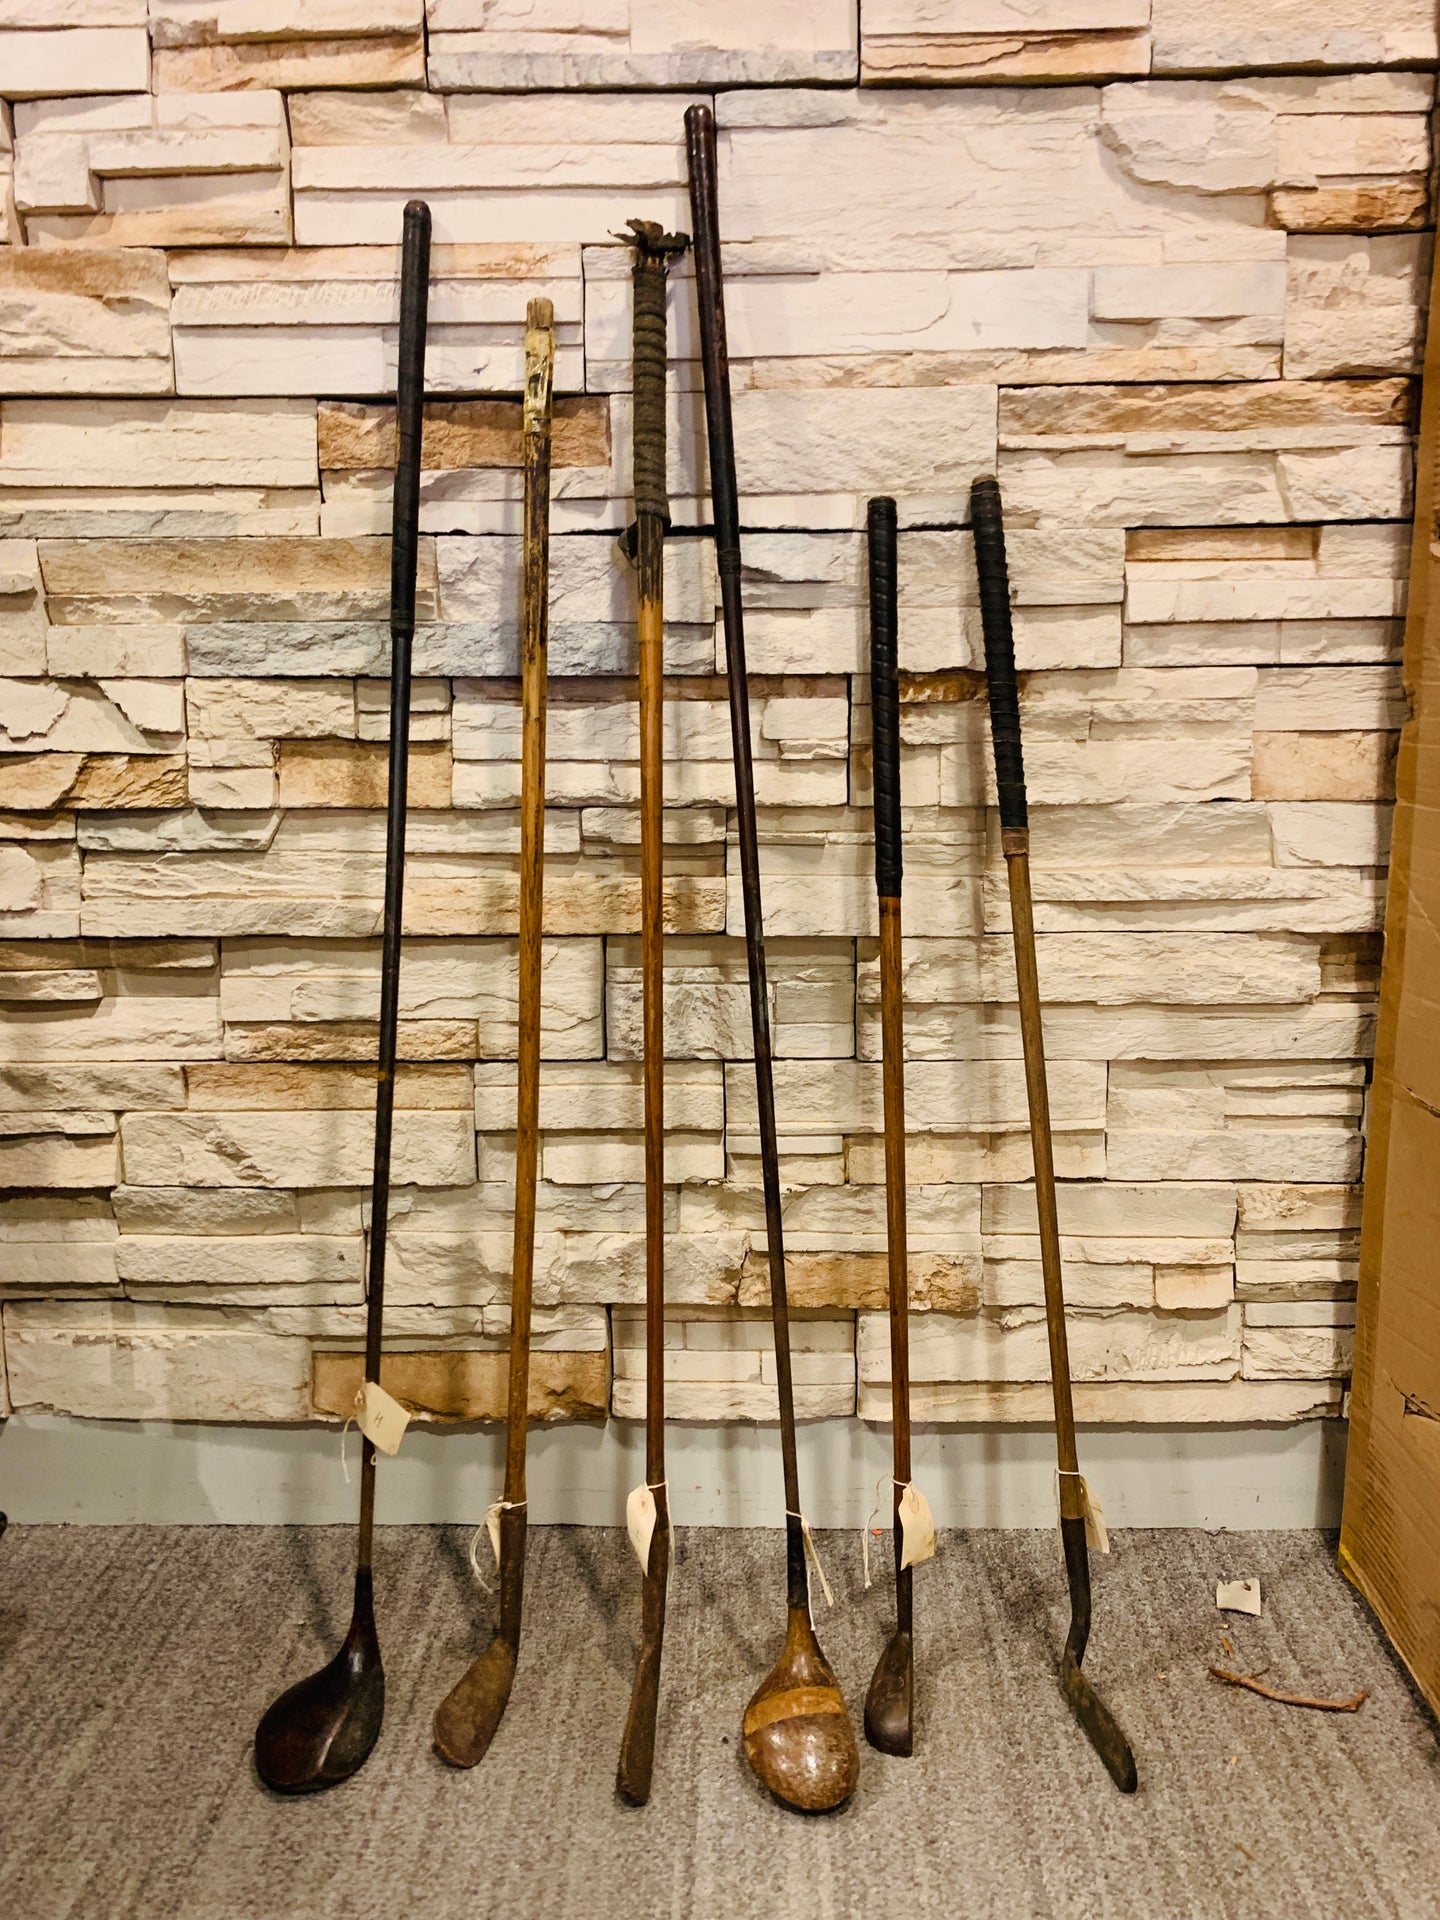 Rustic Golf Stick Sports Equipment